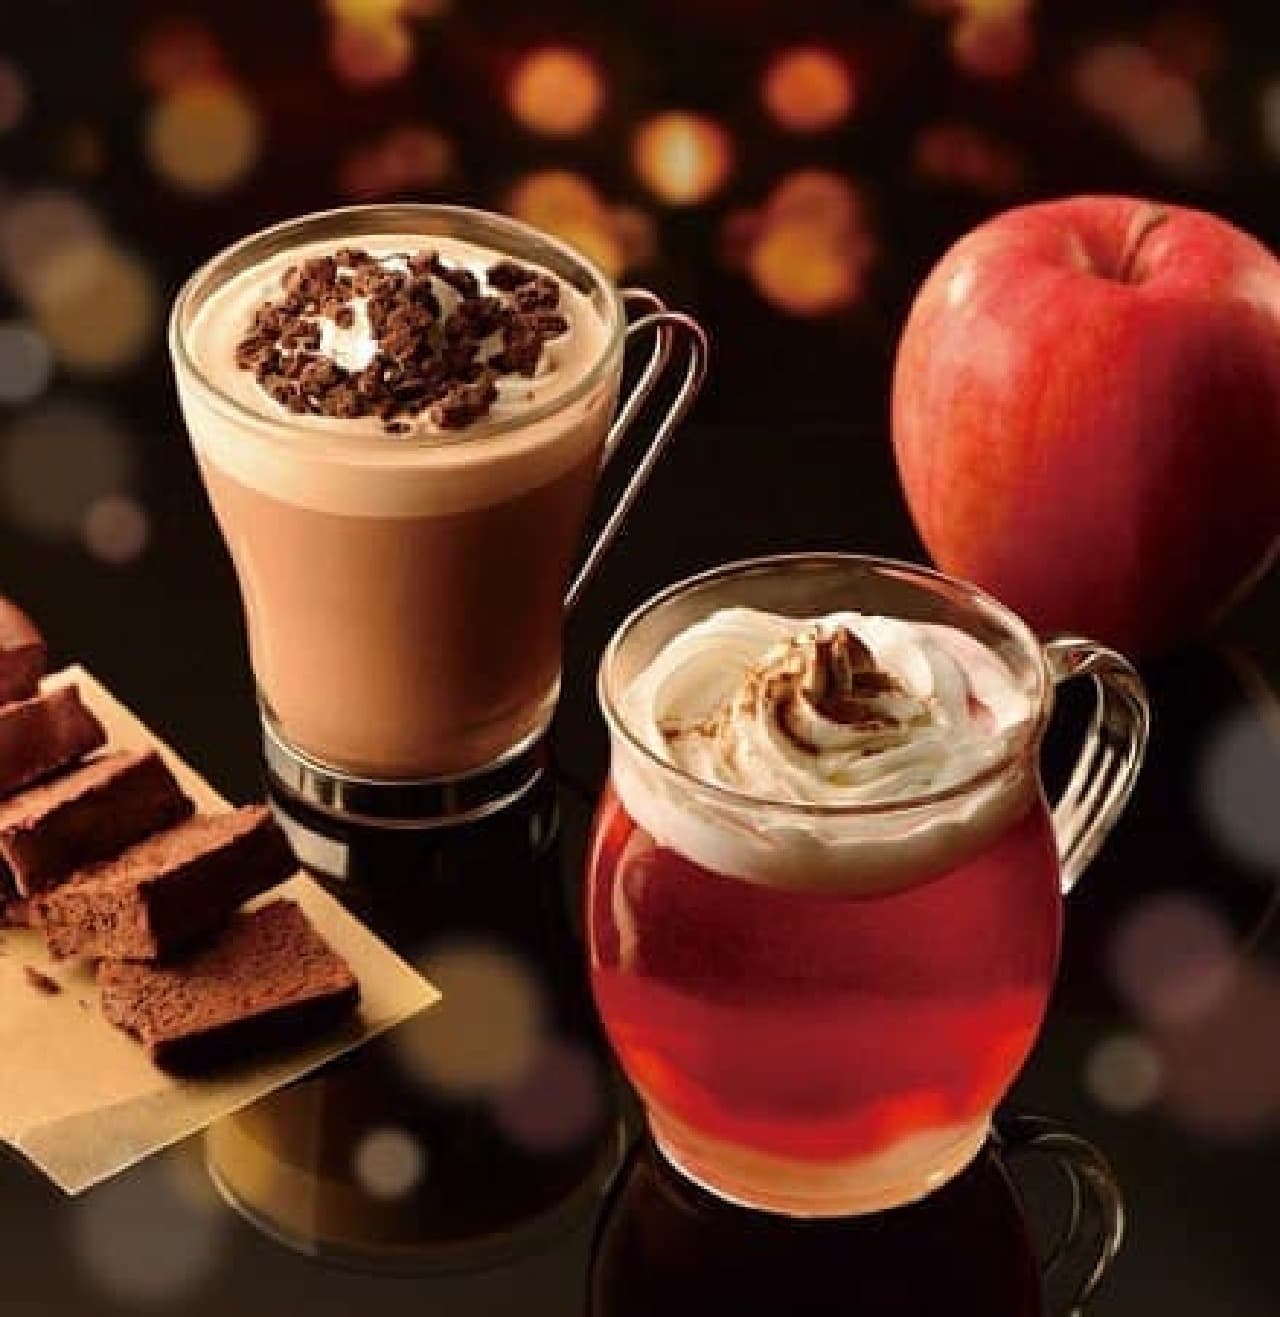 Cafe de Clie "Hot Apple Cinnamon" "Brownie Cocoa"